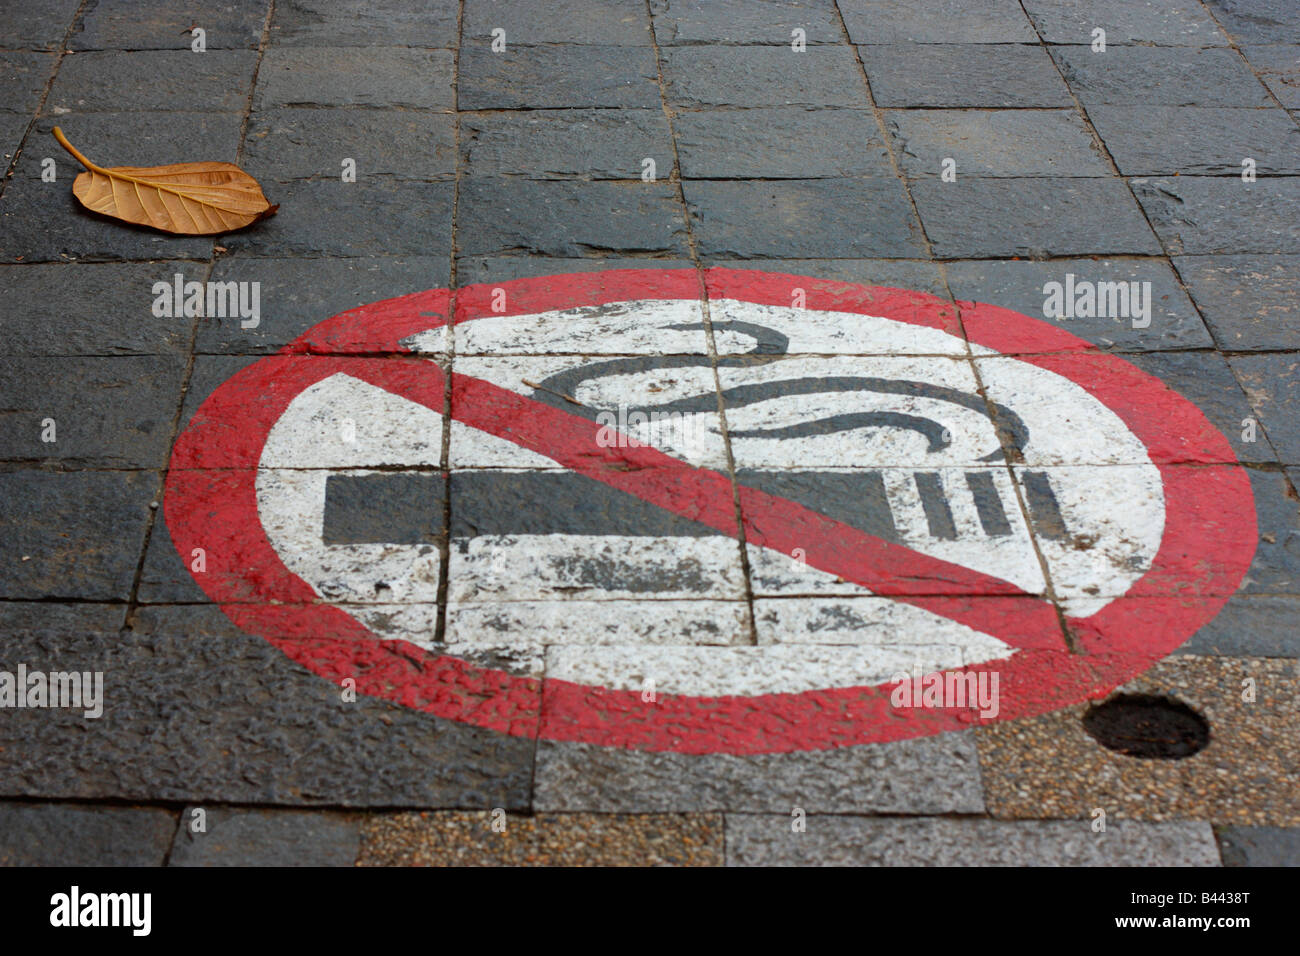 A 'No Smoking' symbol painted on a stone sidewalk. Stock Photo